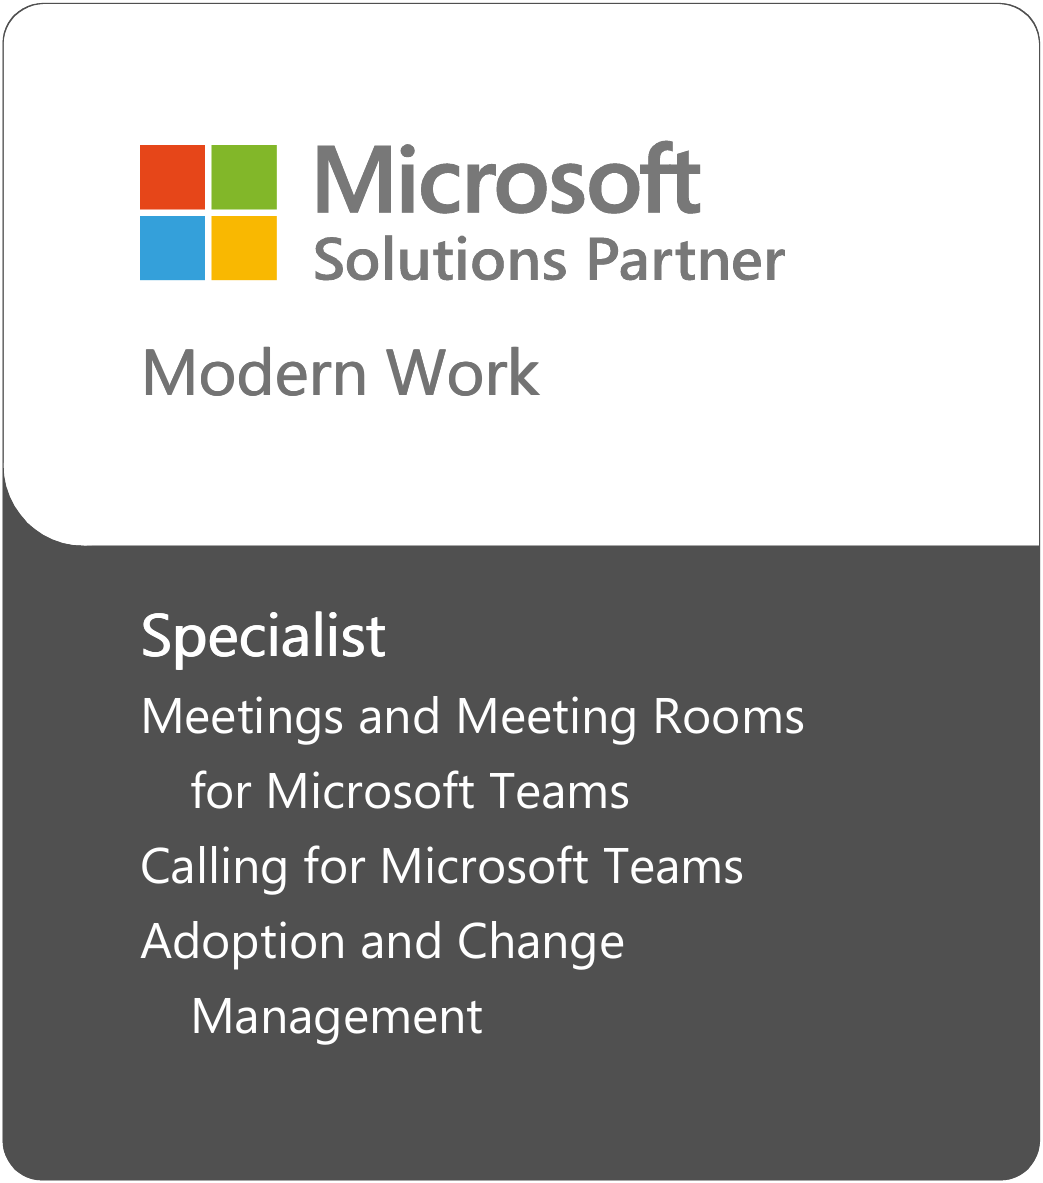 Microsoft badge ModernWork